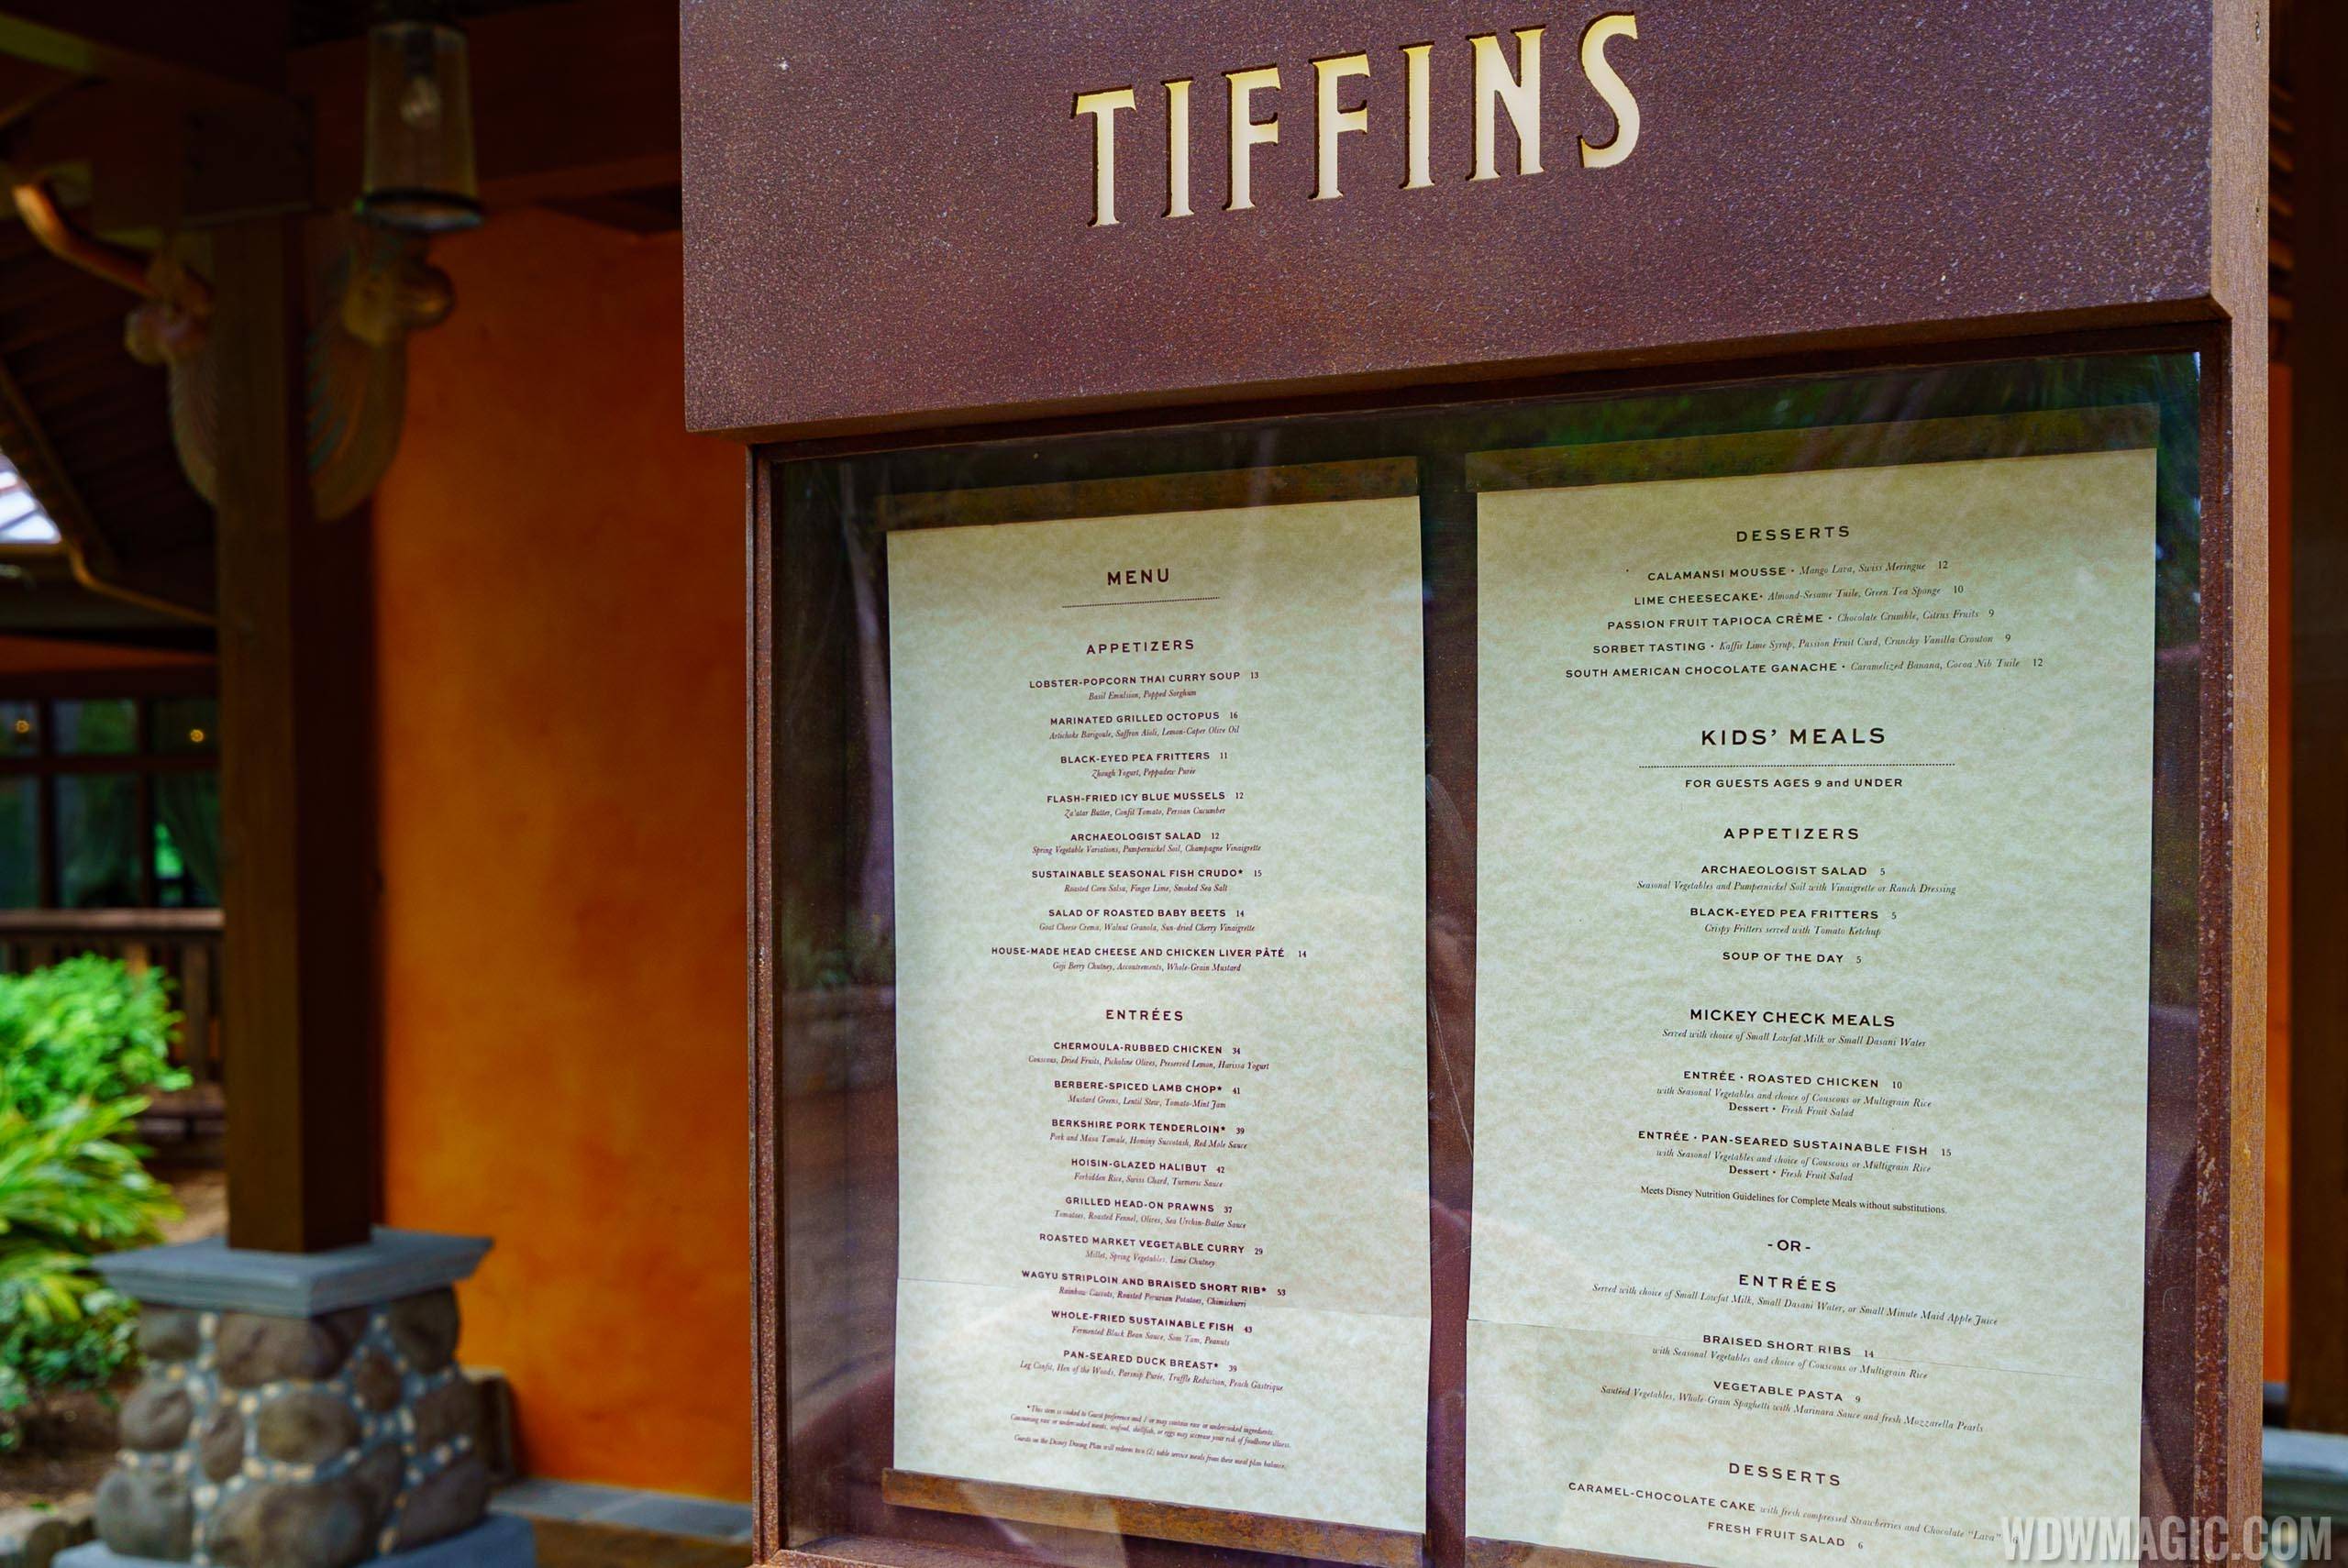 Tiffins overview